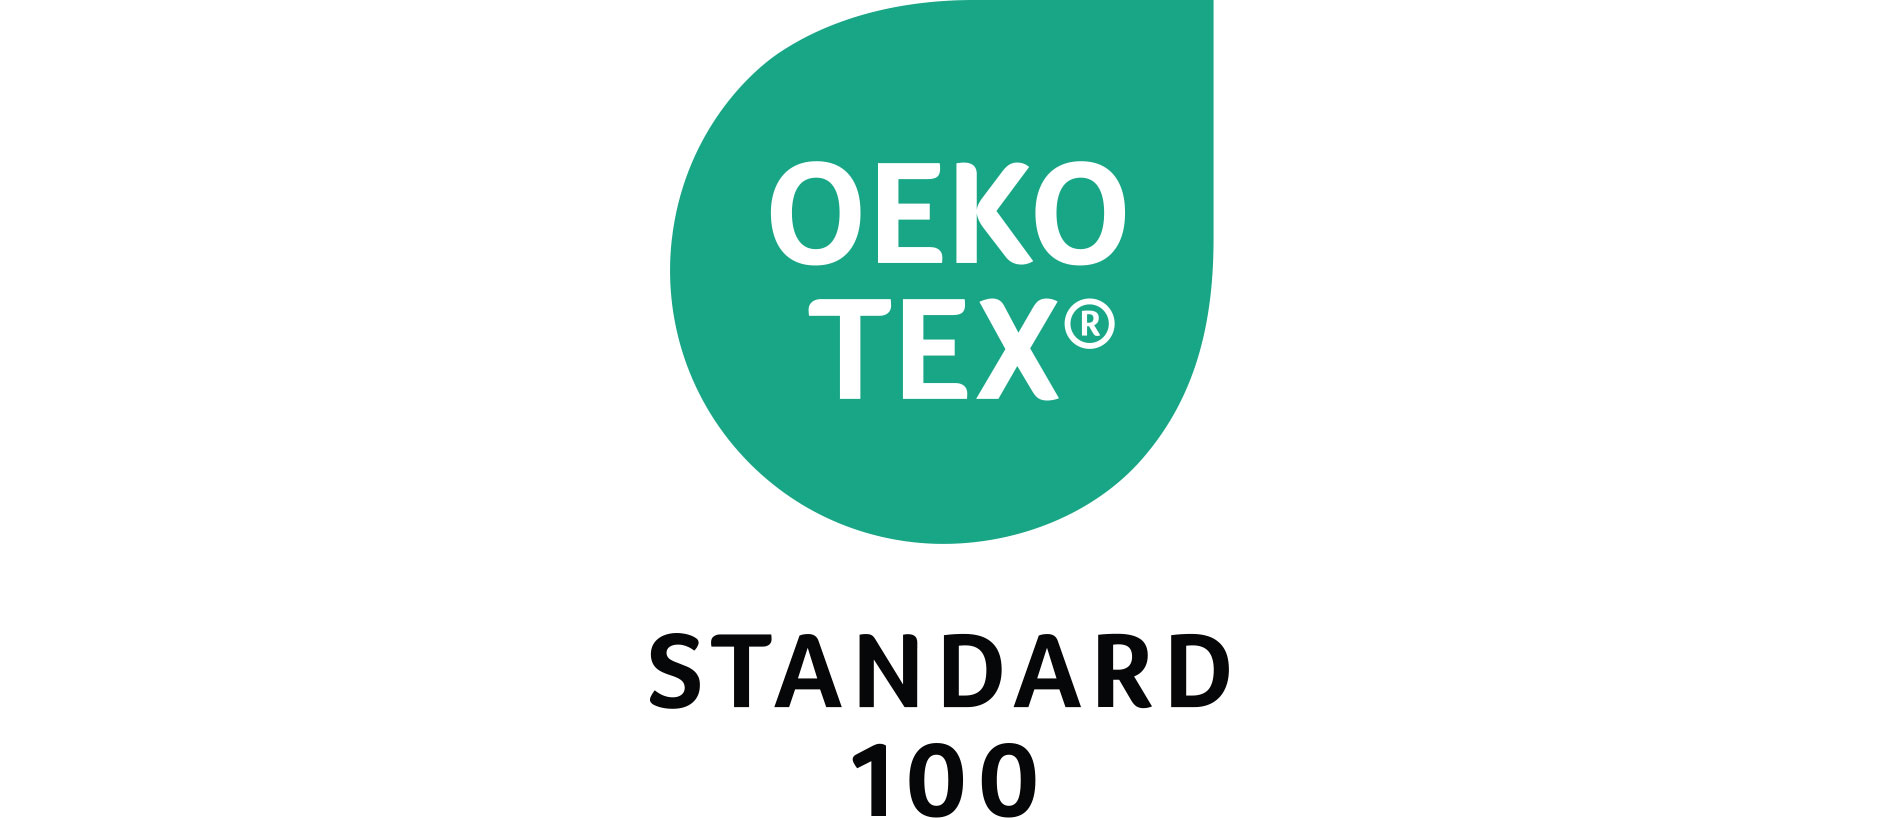 What is OEKO-TEX®? | Vibrant Body Company BLOG blog | Vibrant Body Company